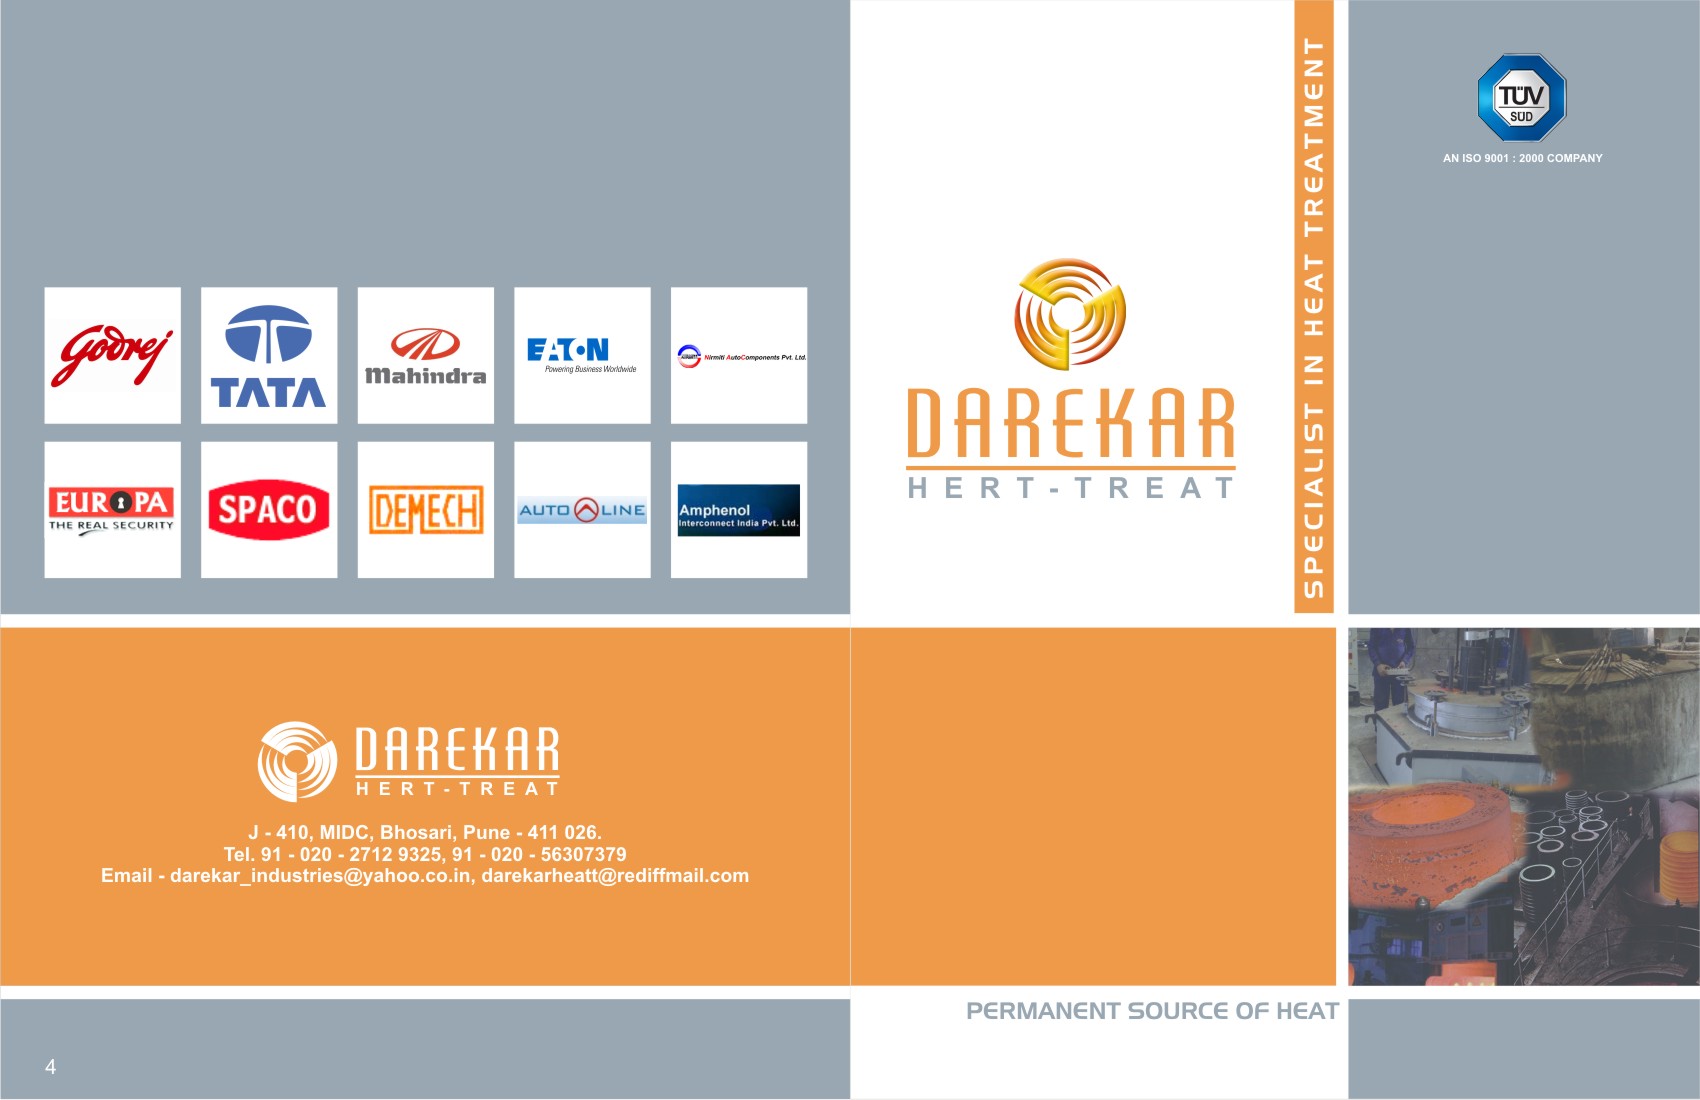 darekar-heat-treatment-catalogue-graphic-design